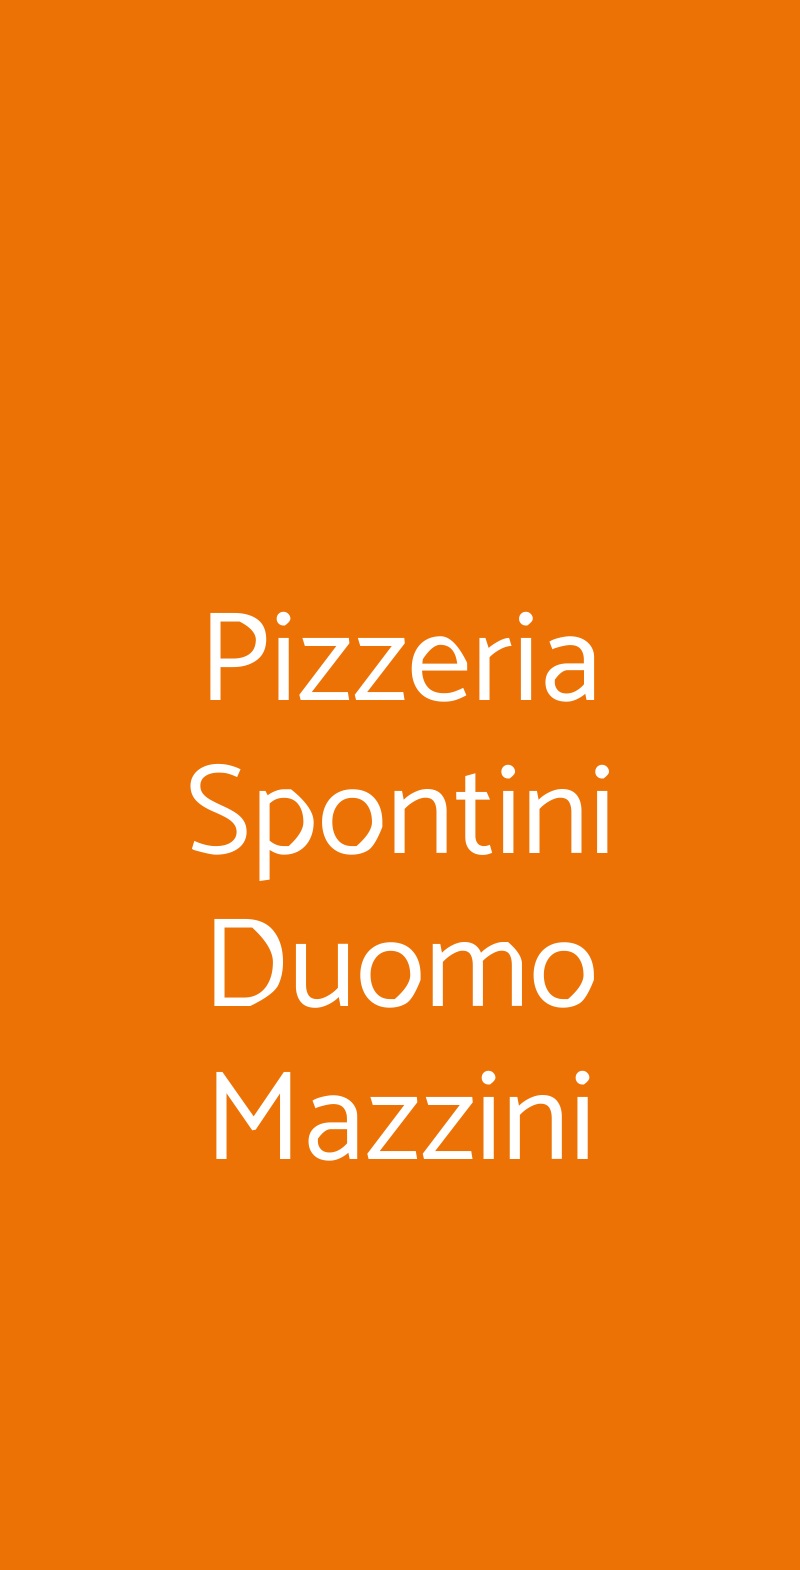 Pizzeria Spontini Duomo Mazzini Milano menù 1 pagina